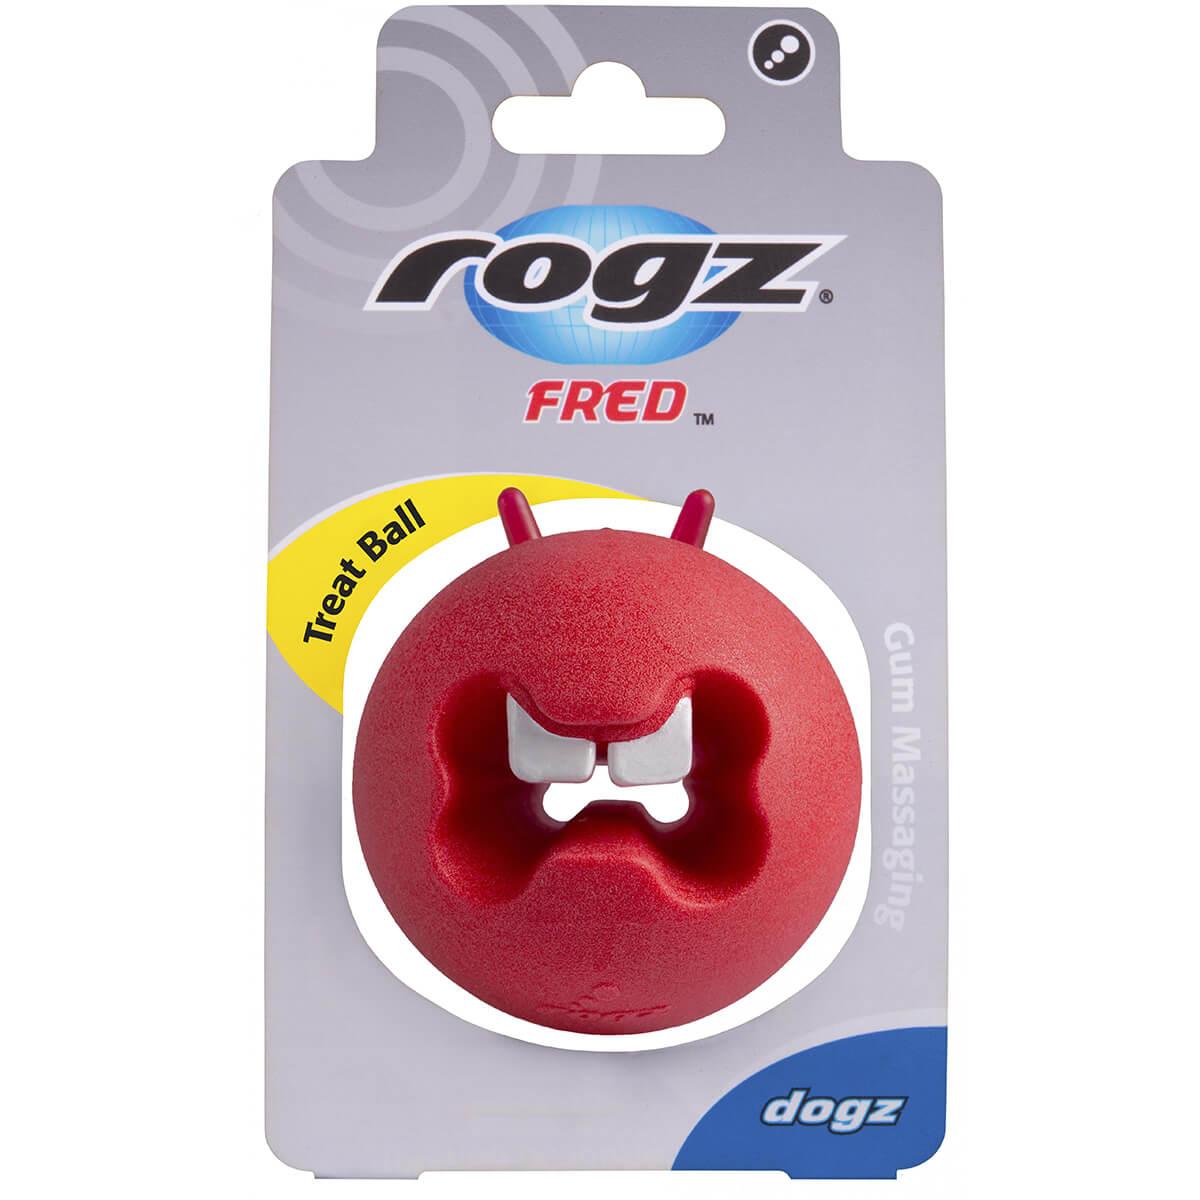 Fred Dog Treat Ball